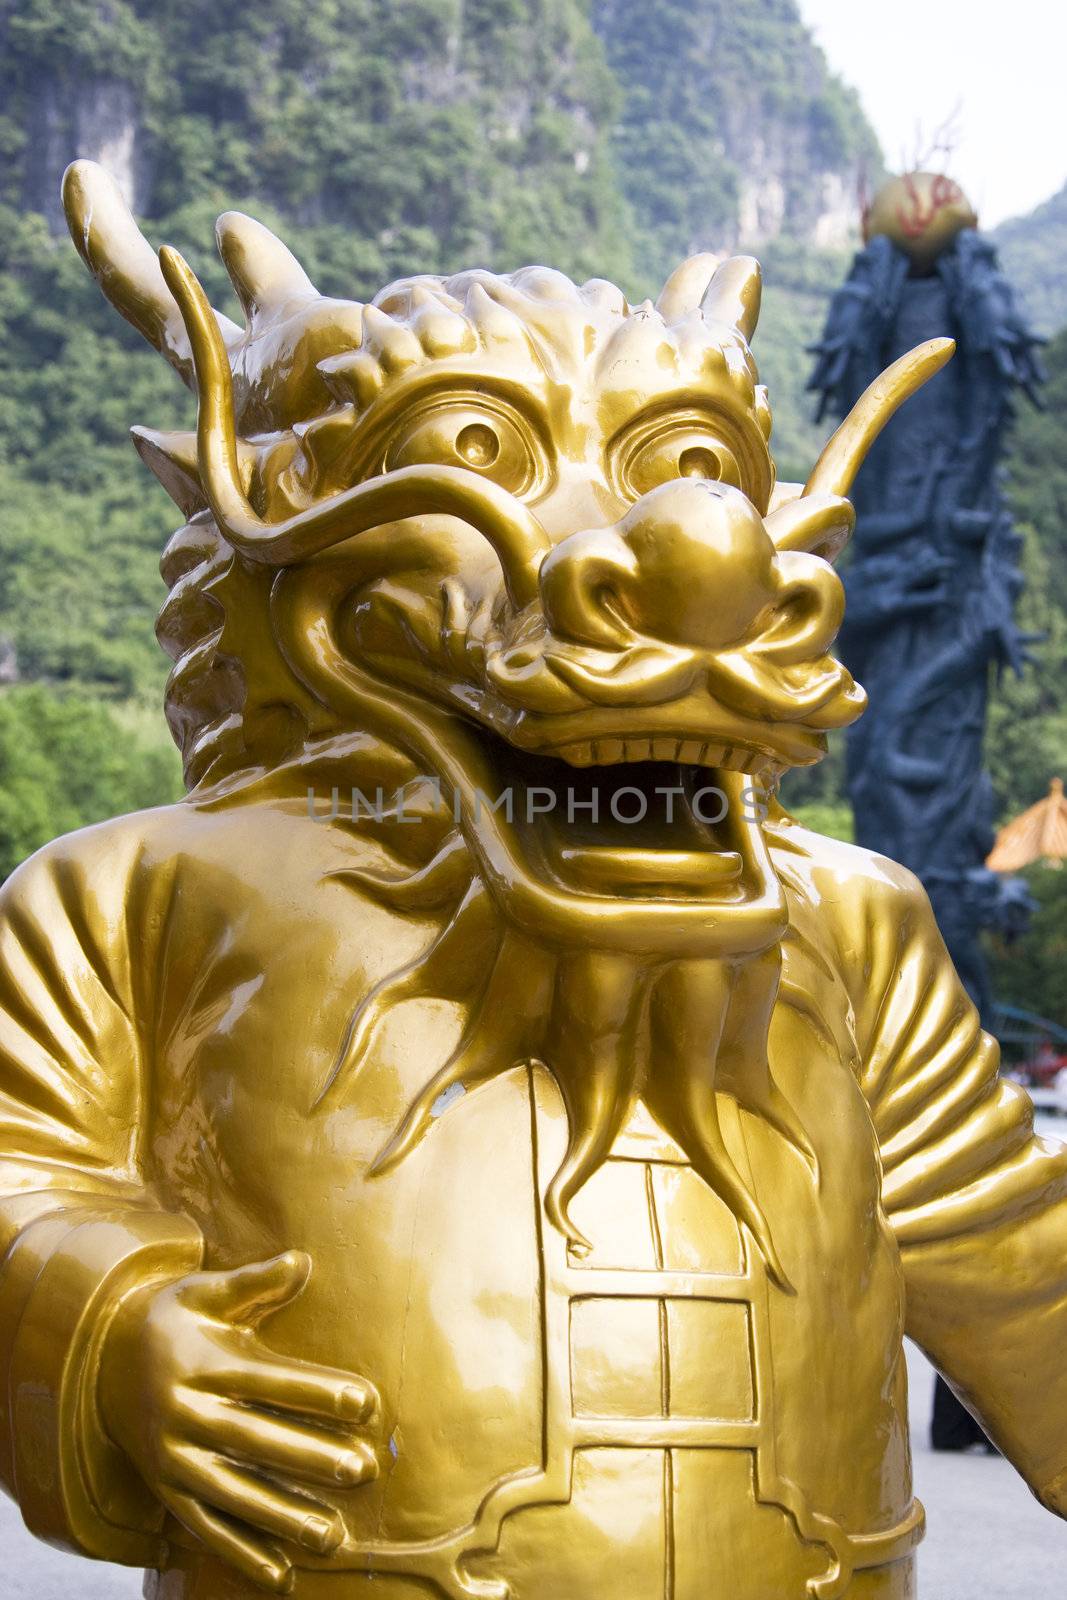 Image of a dragon guardian at the Assembly Dragon Cave entrance, Yangshuo, Guilin, China.